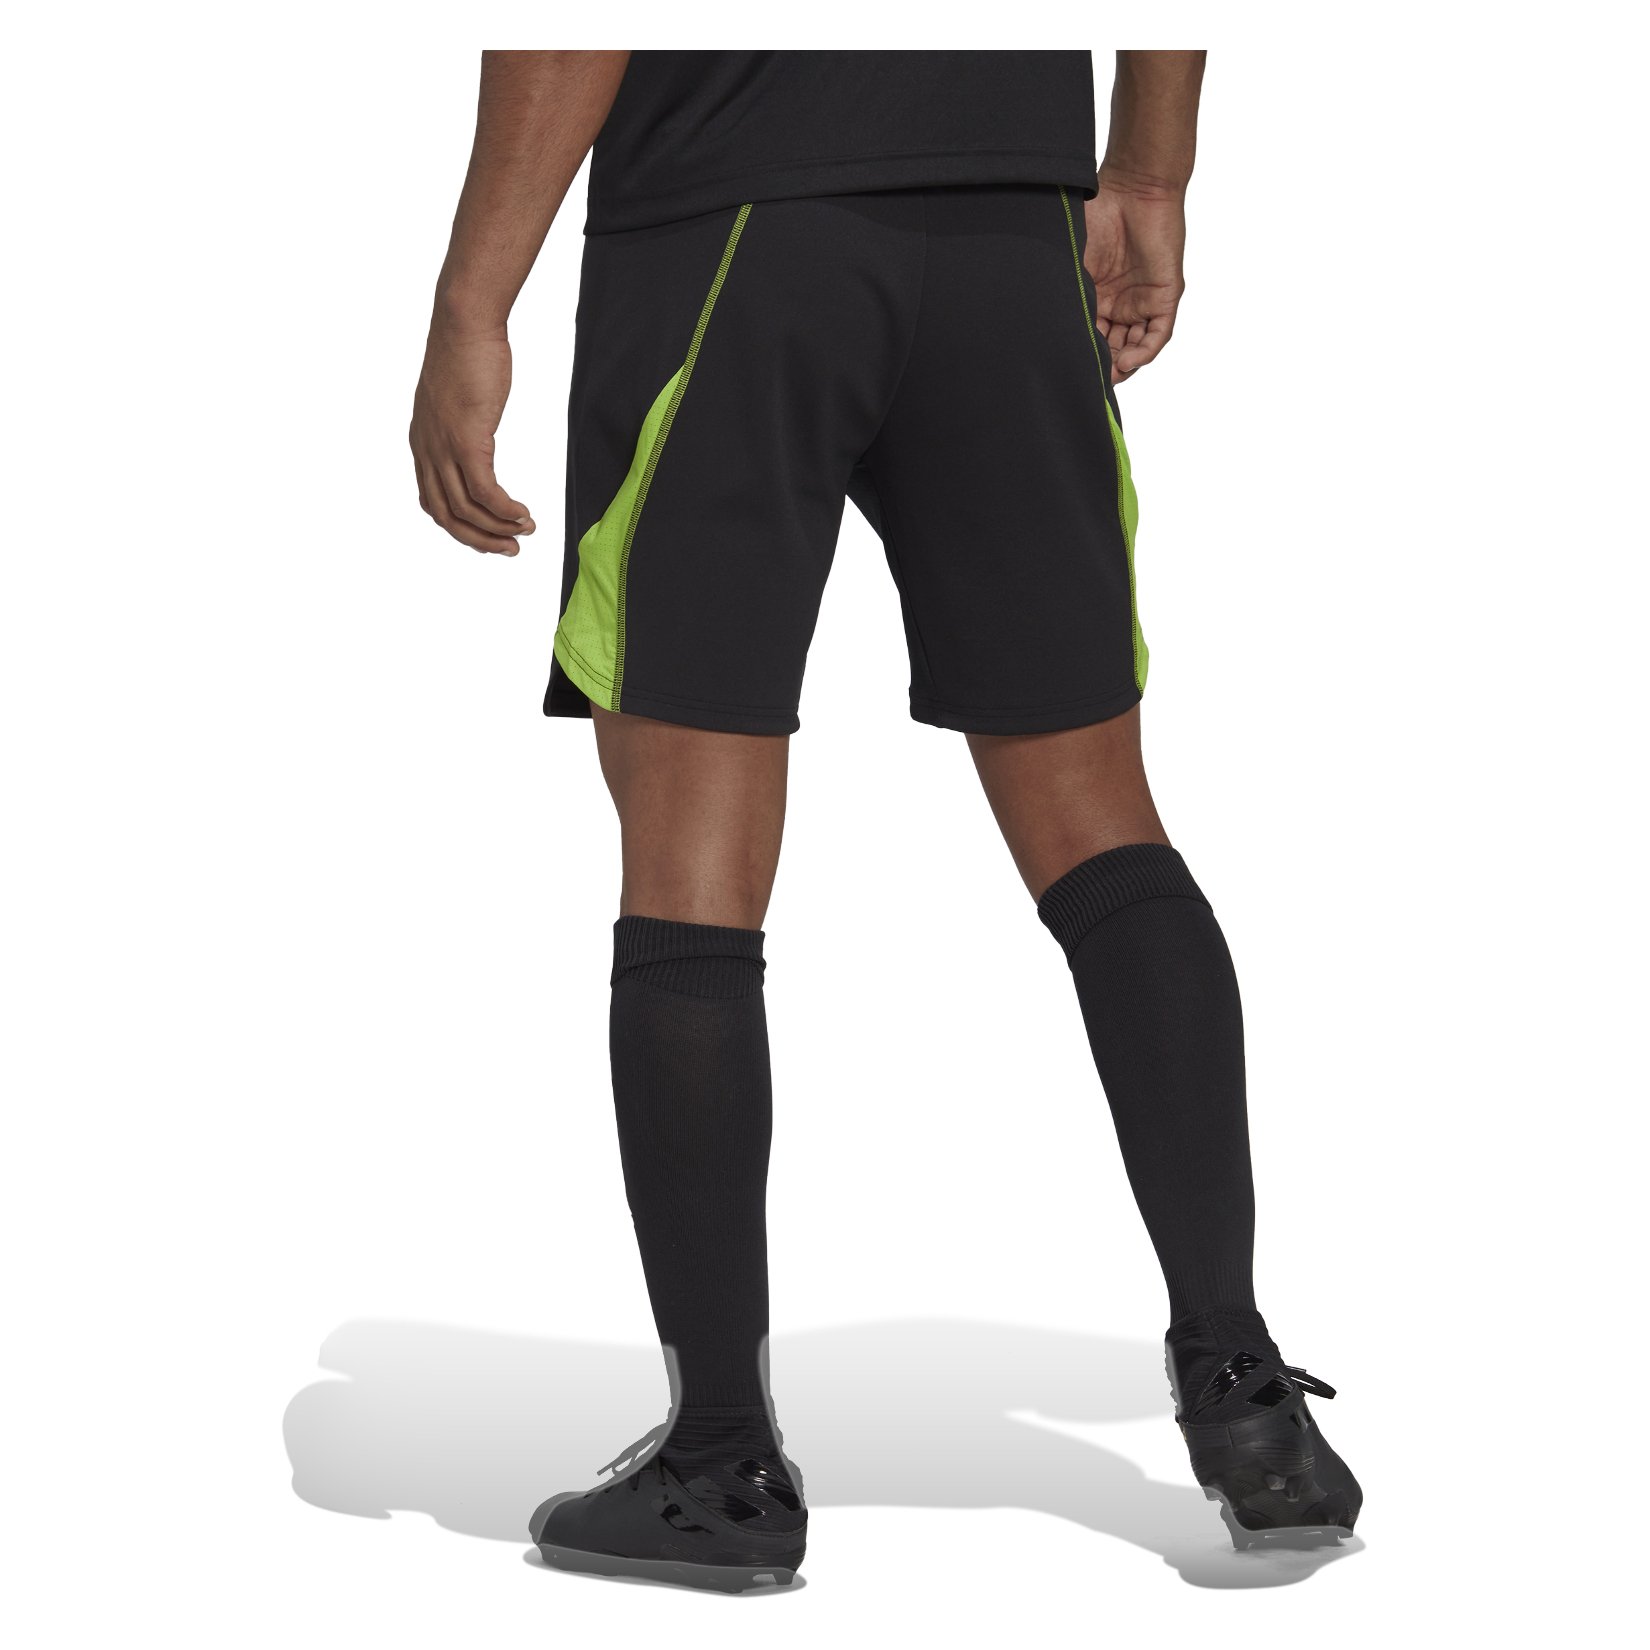 adidas Tiro 23 Pro Goalkeeper Shorts